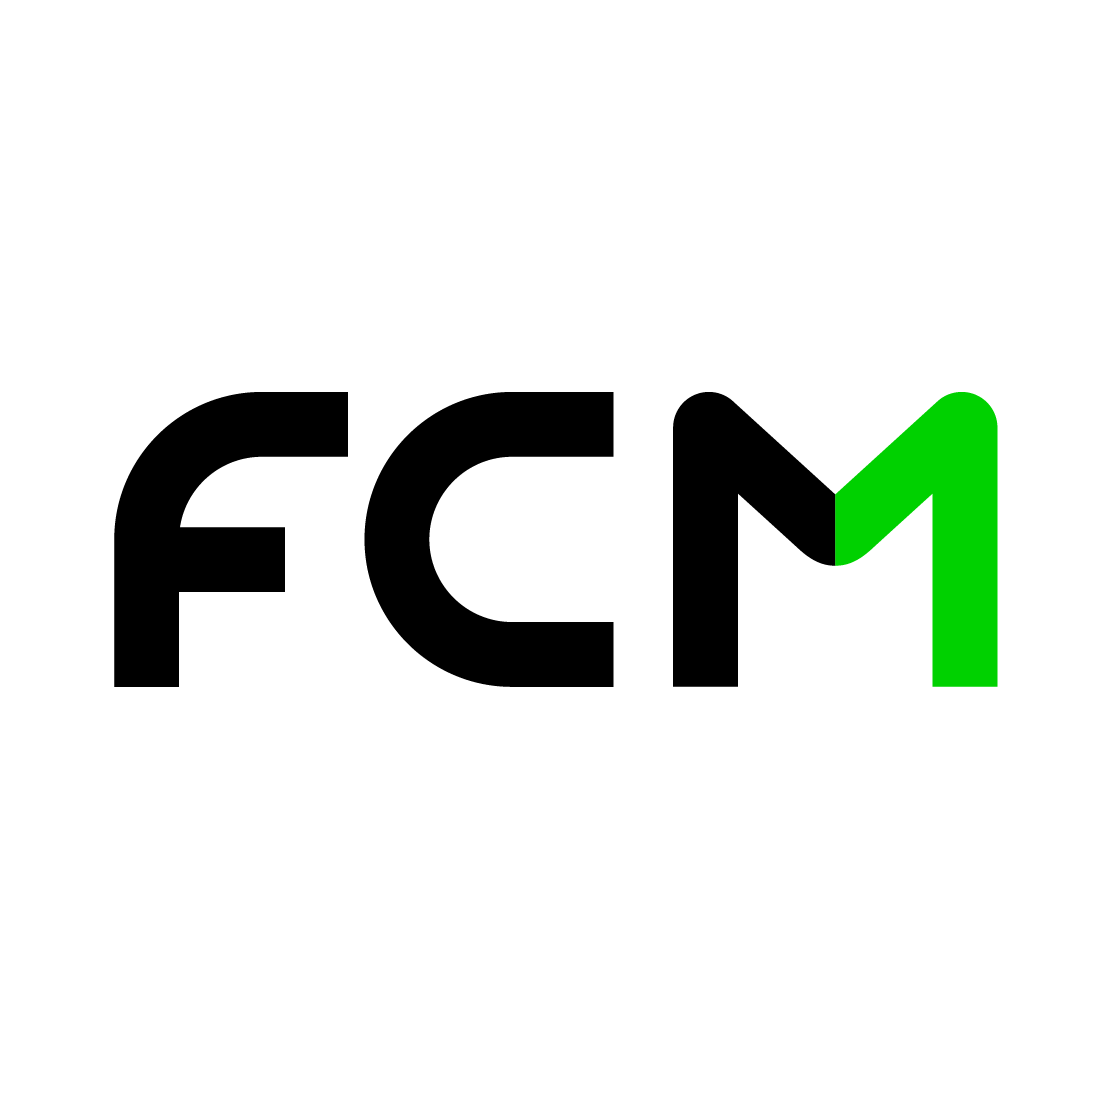 FCM Travel 